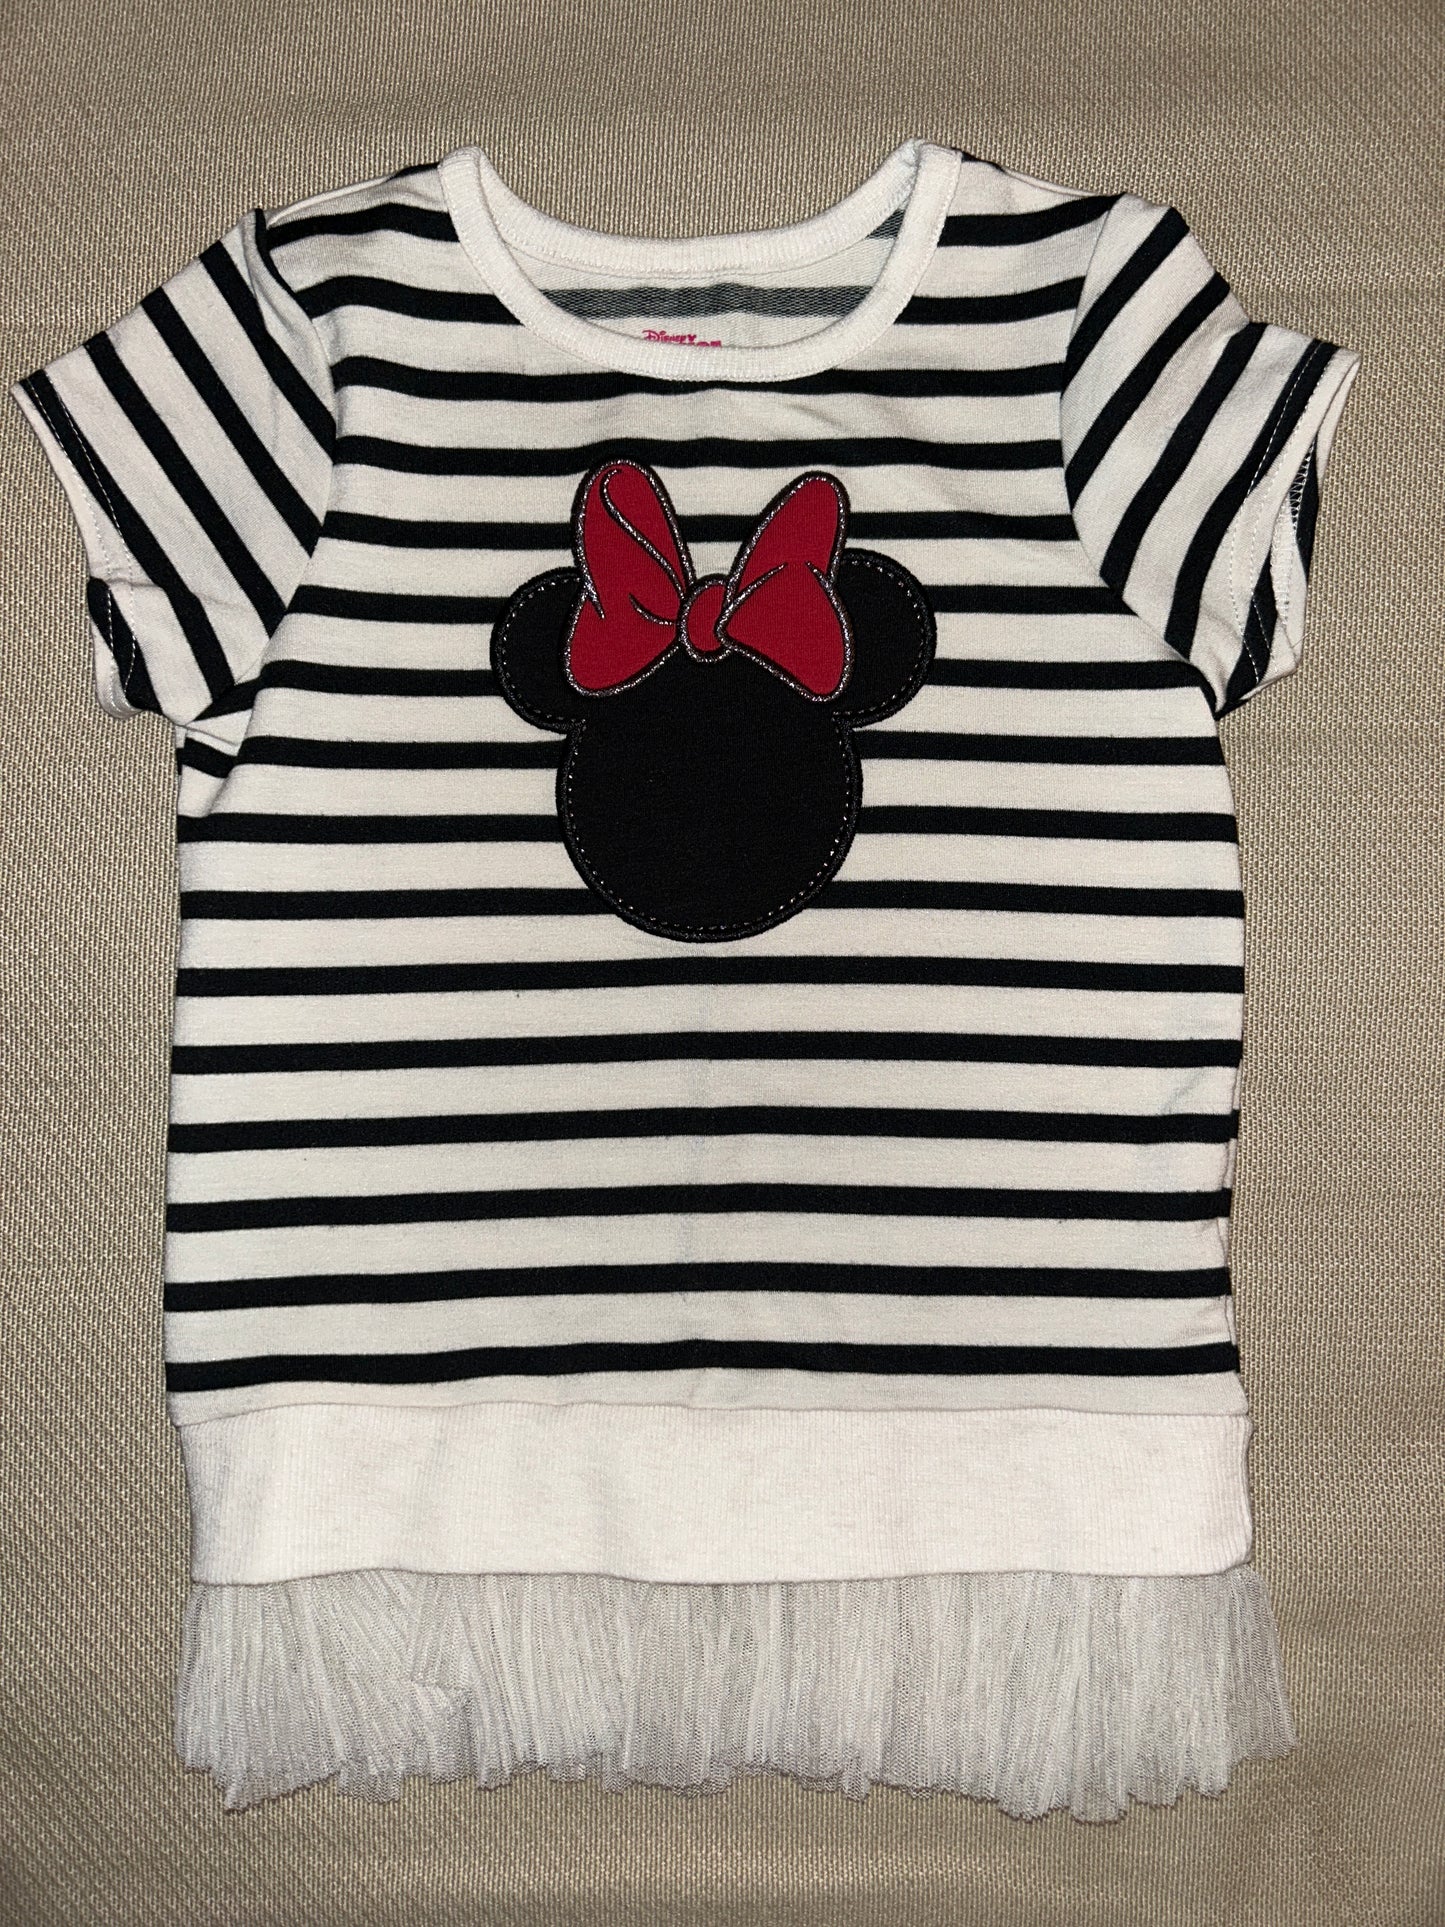 Disney Minnie Mouse Girls Top/Size 6x